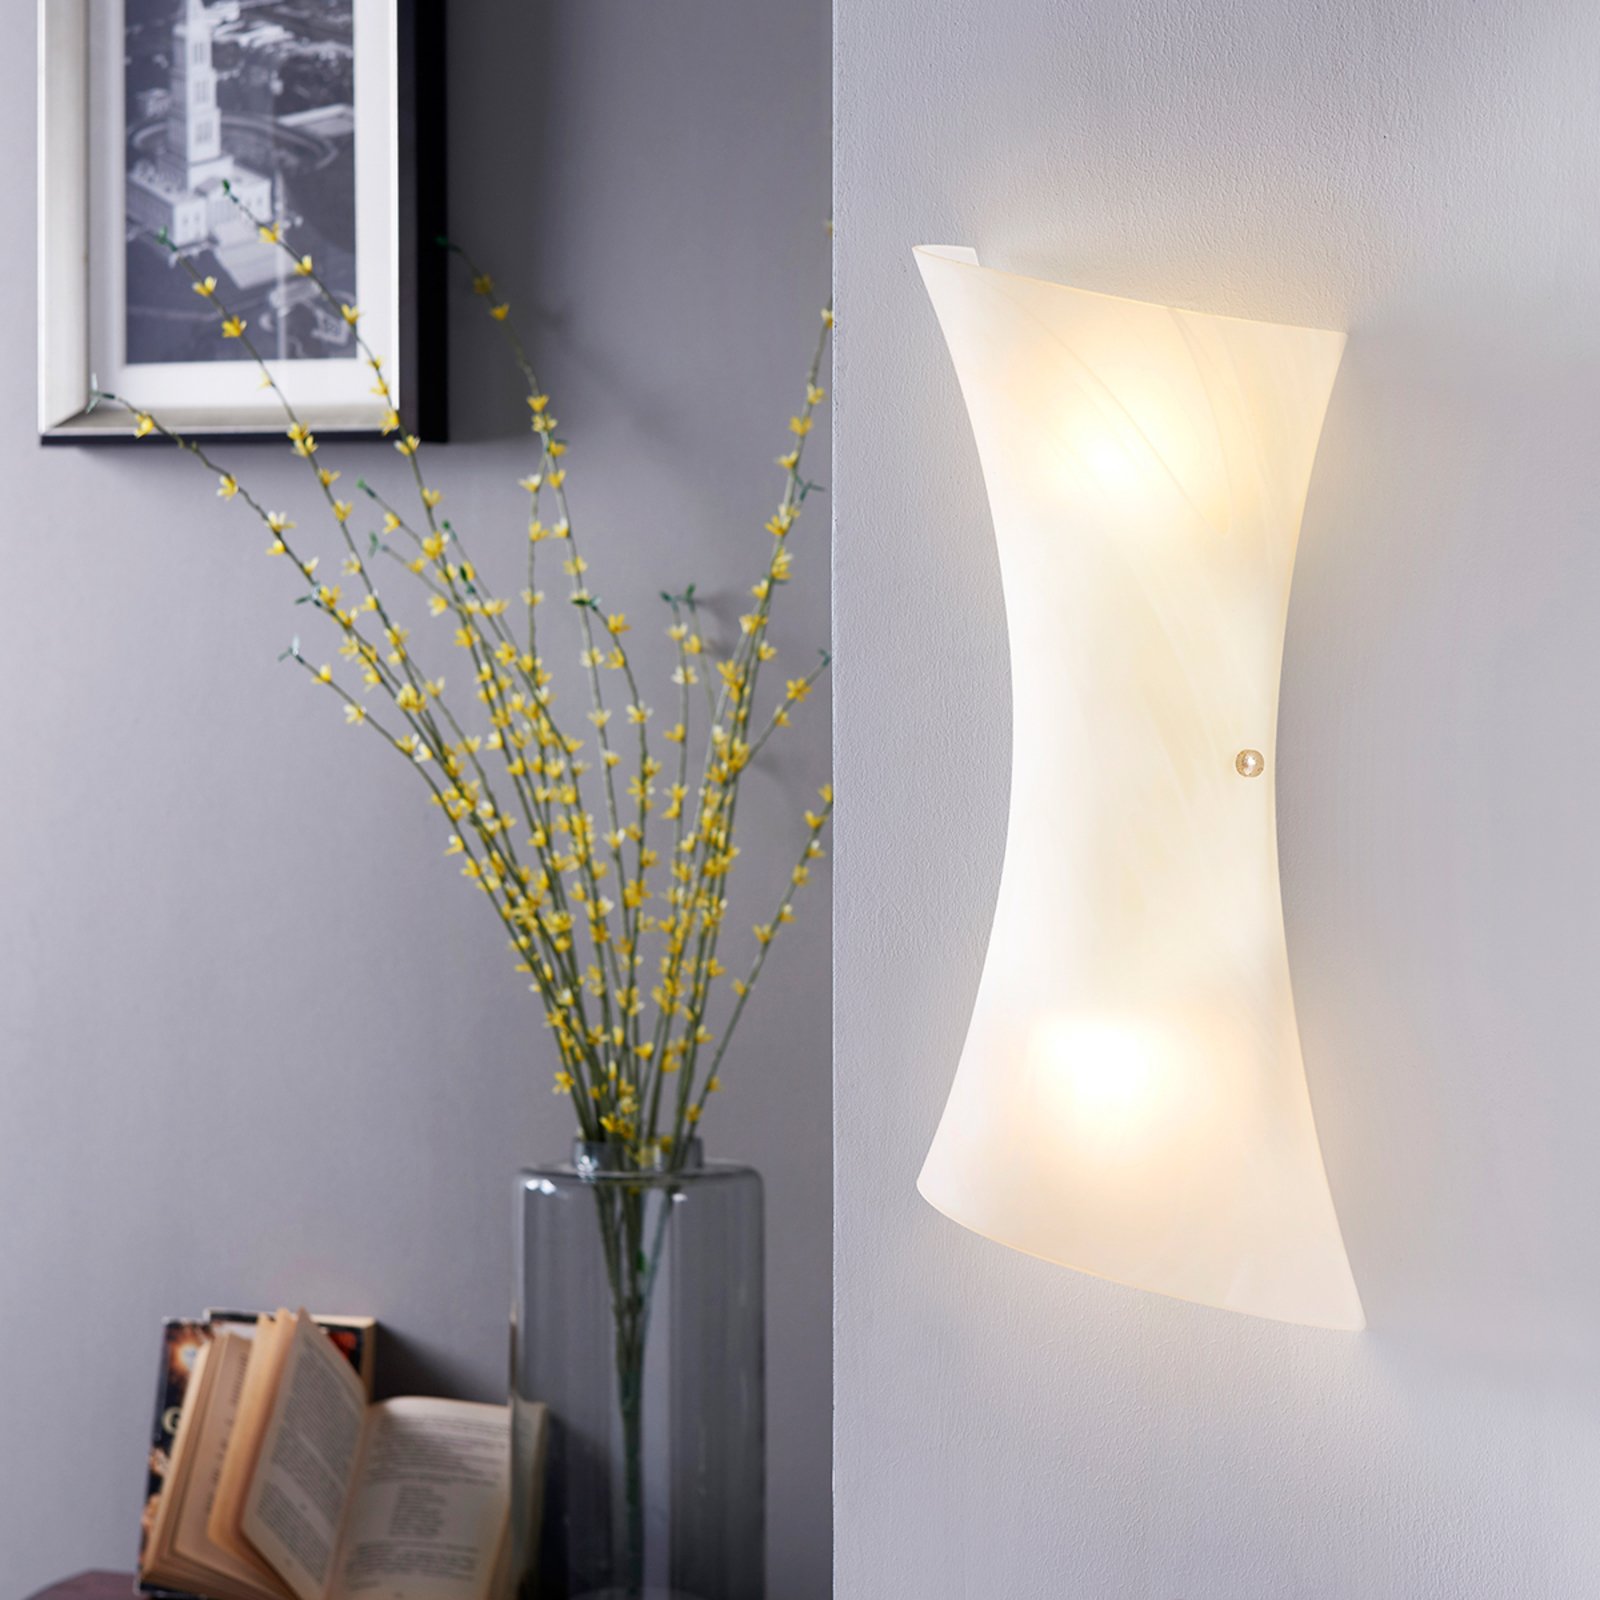 White Ebba LED glass wall light